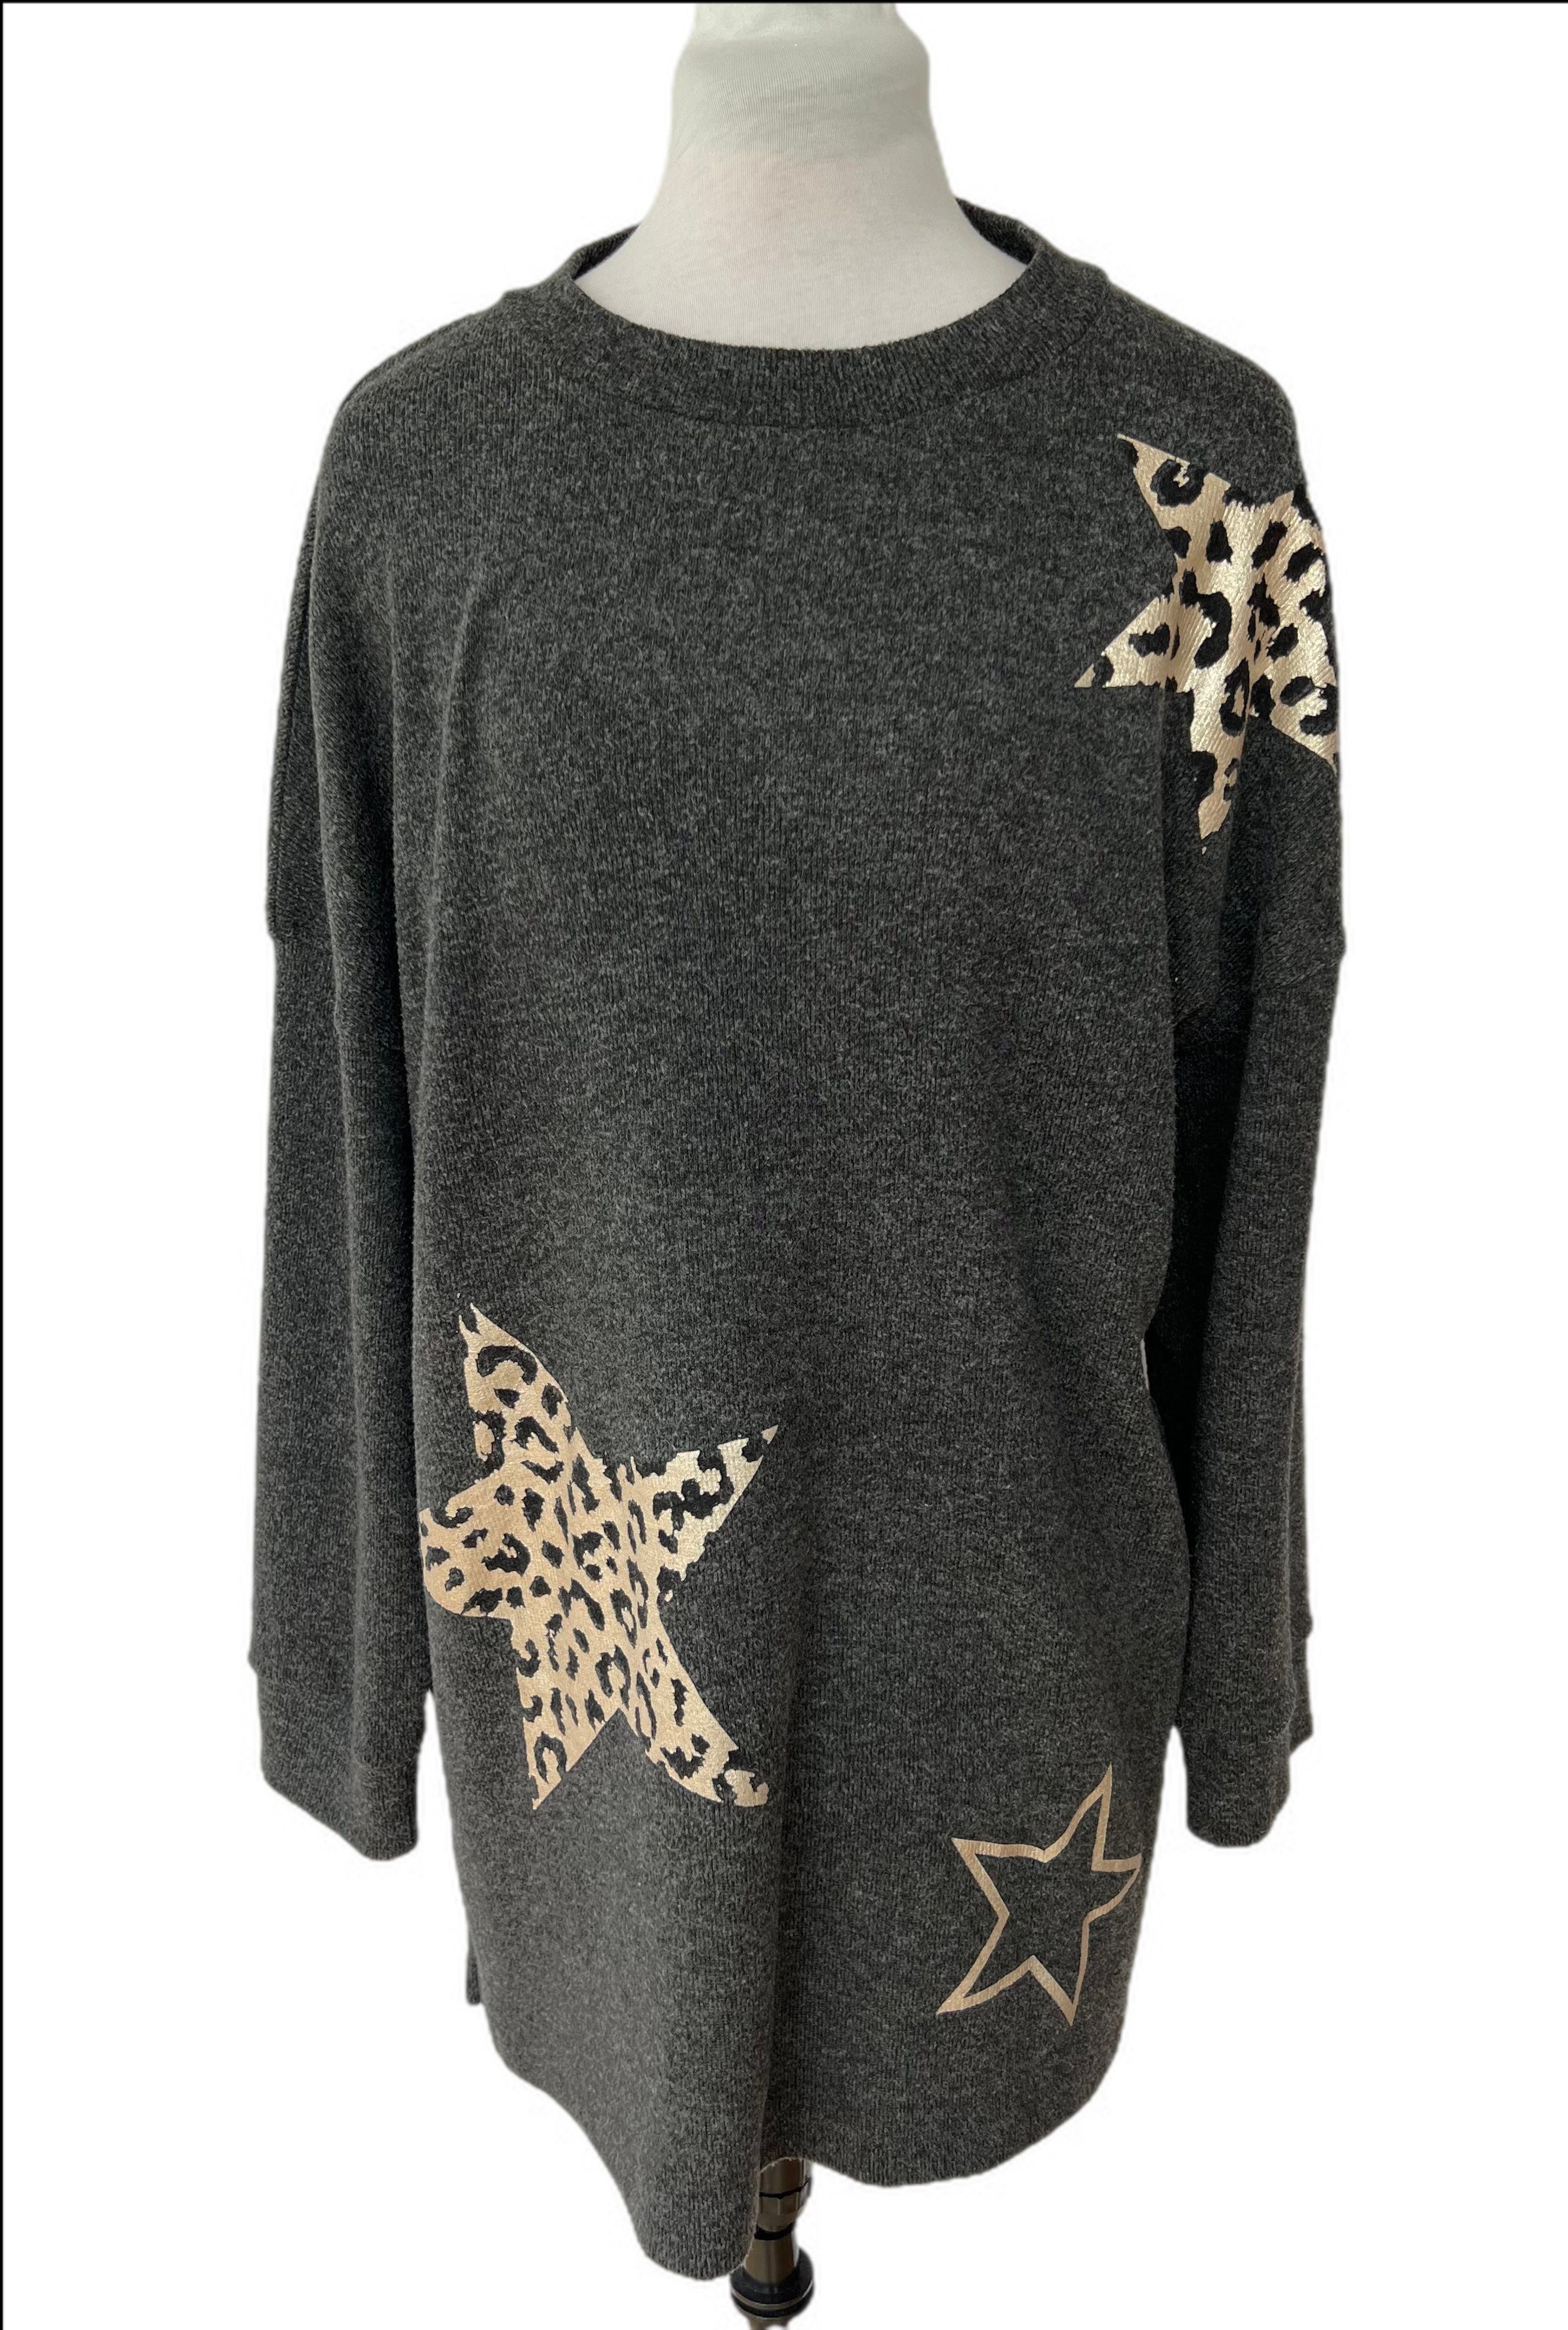 Sweater dress with leopard stars